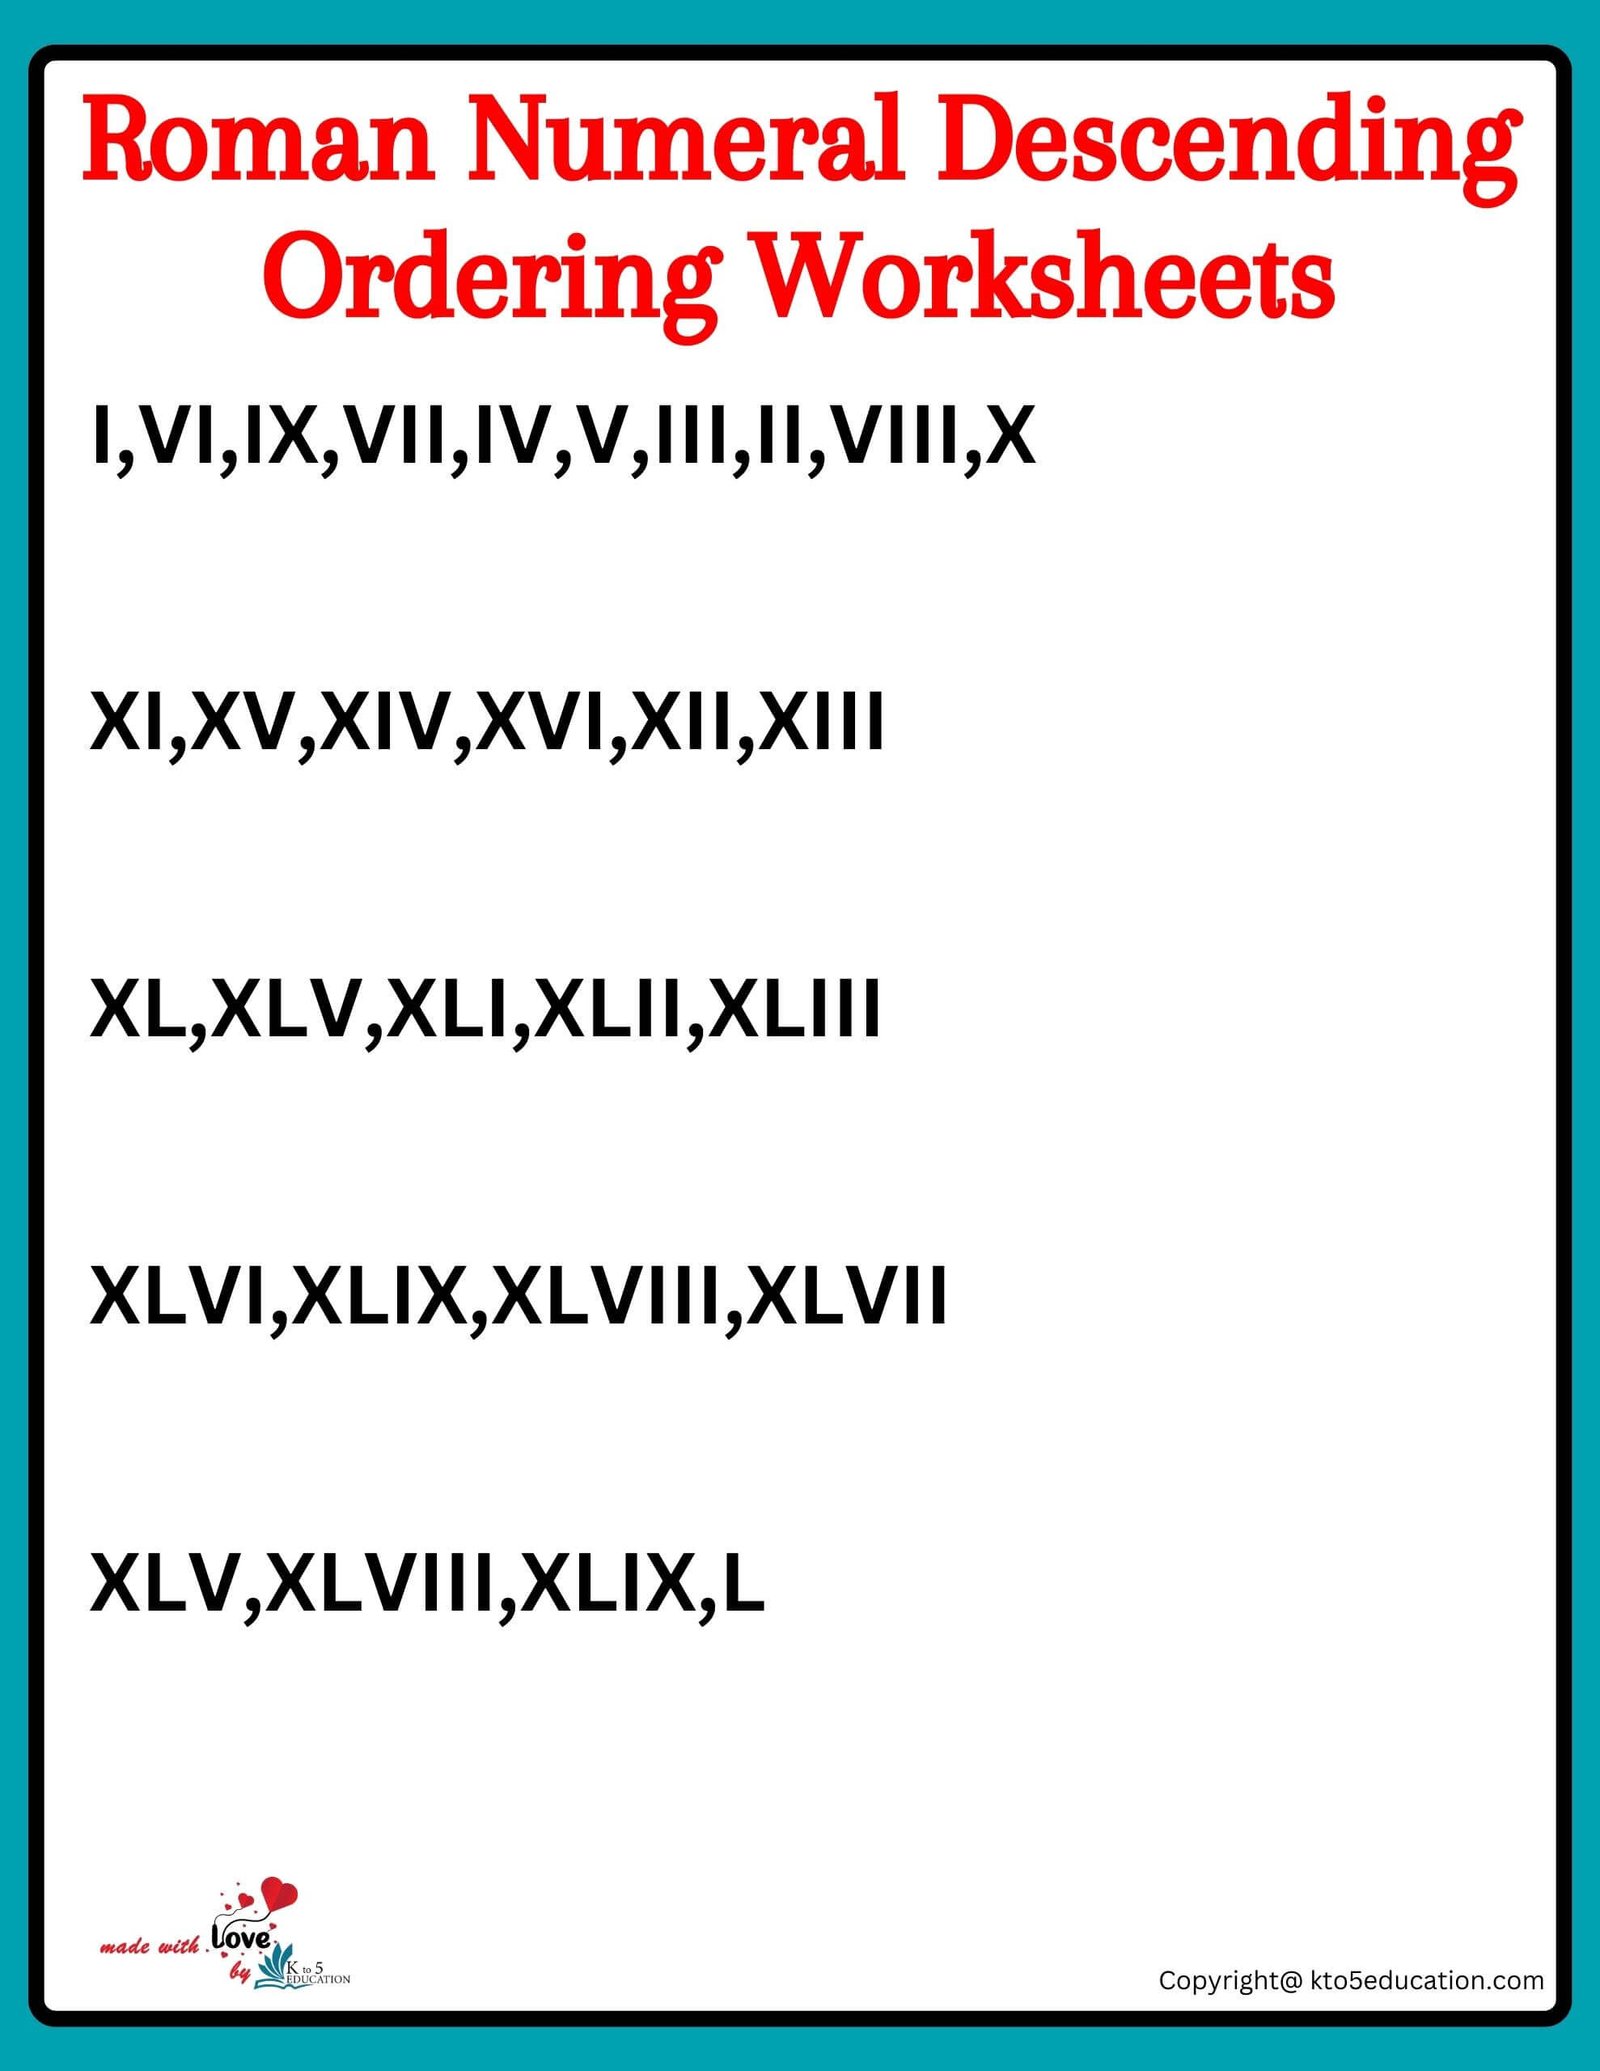 Roman Numeral Descending Ordering Worksheets Grade 5